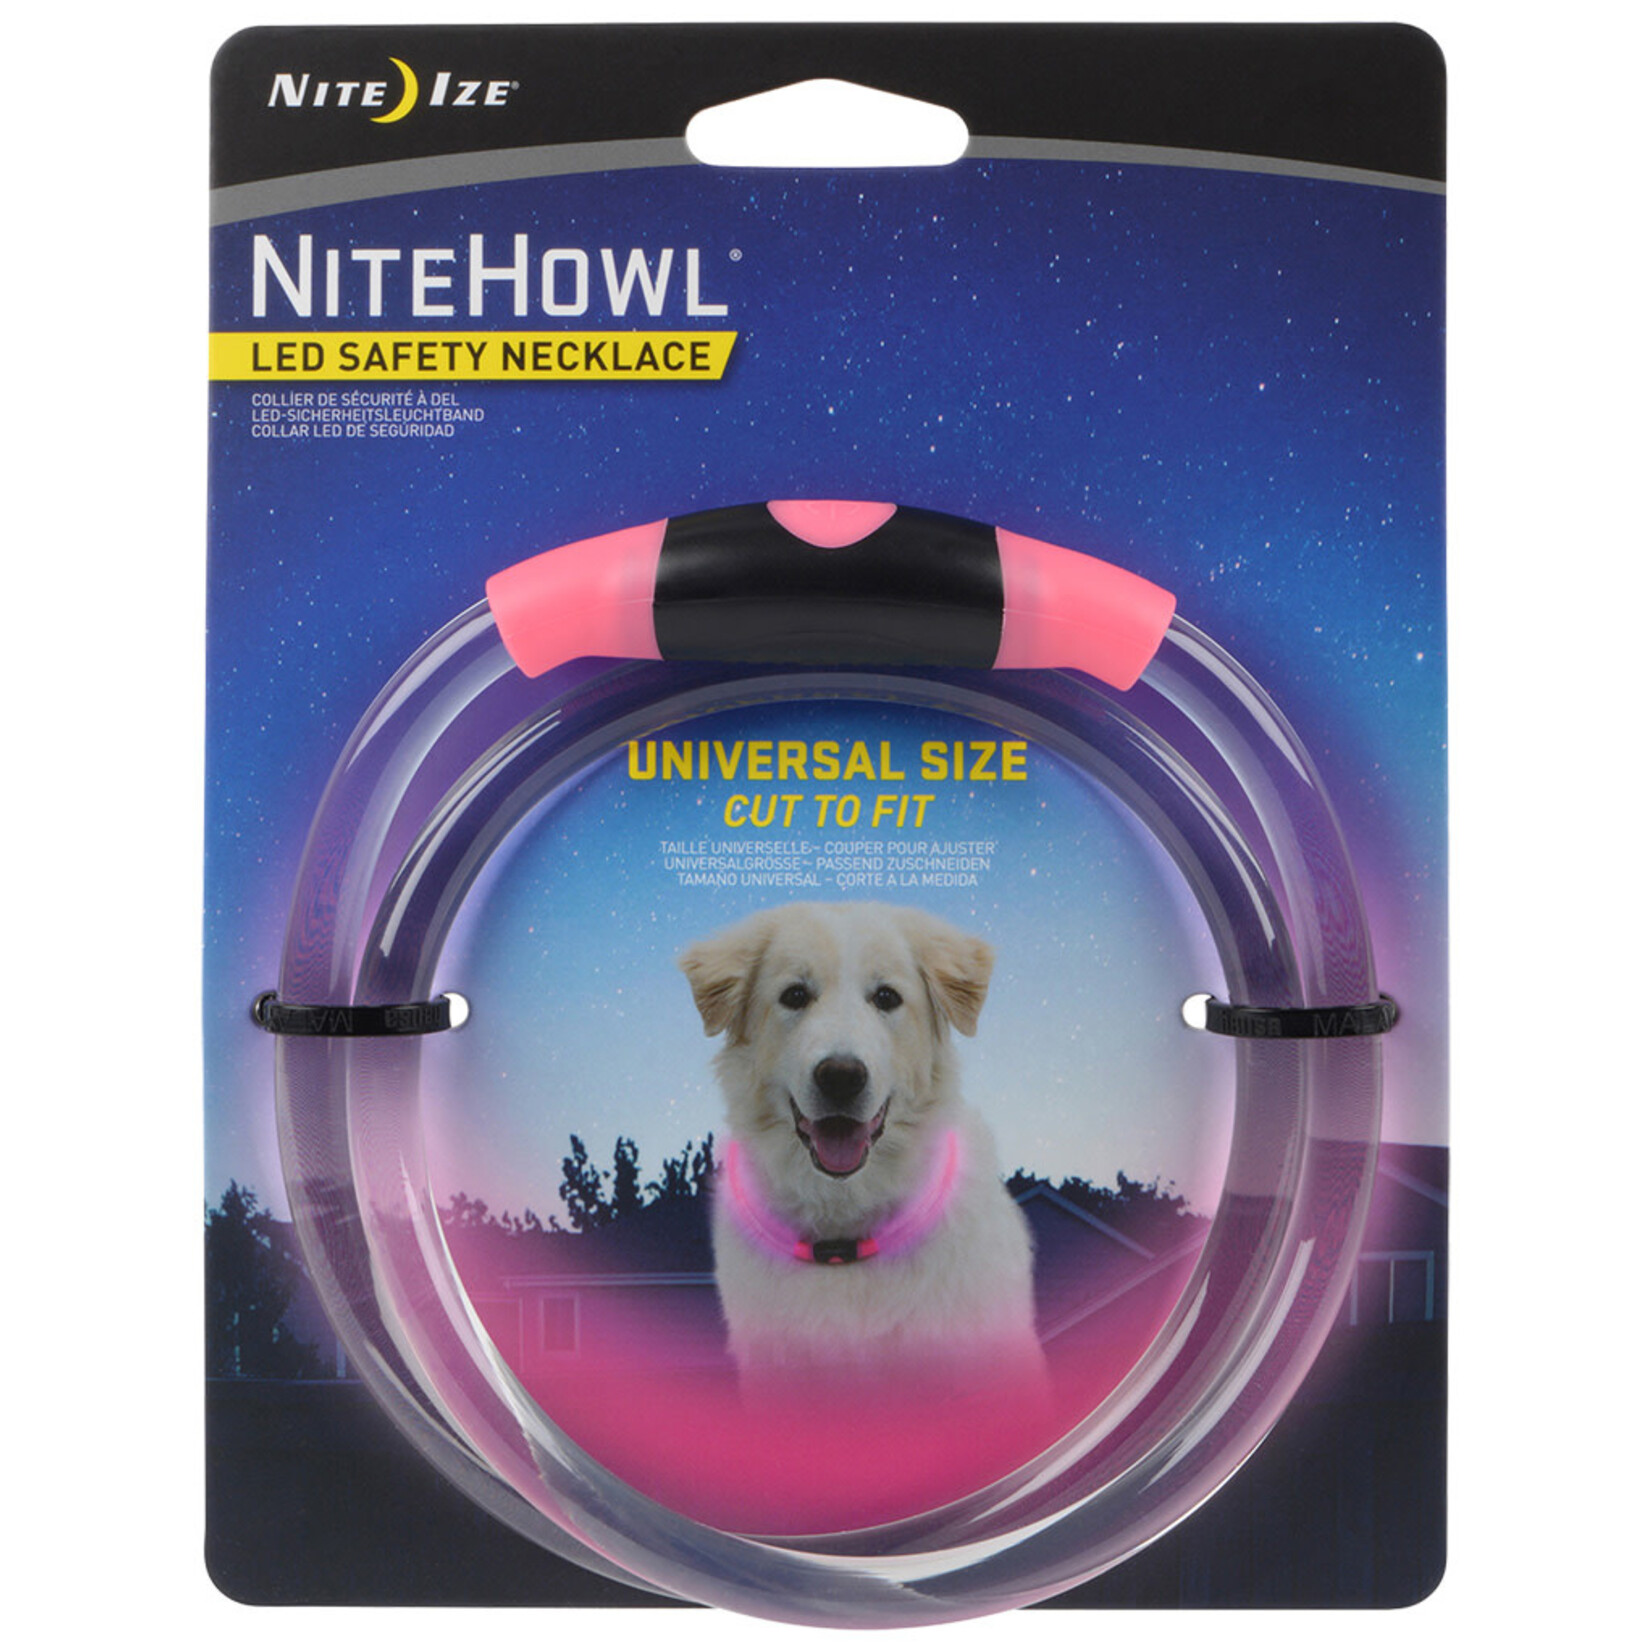 Nite Ize NiteHowl LED Safety Necklace Pink